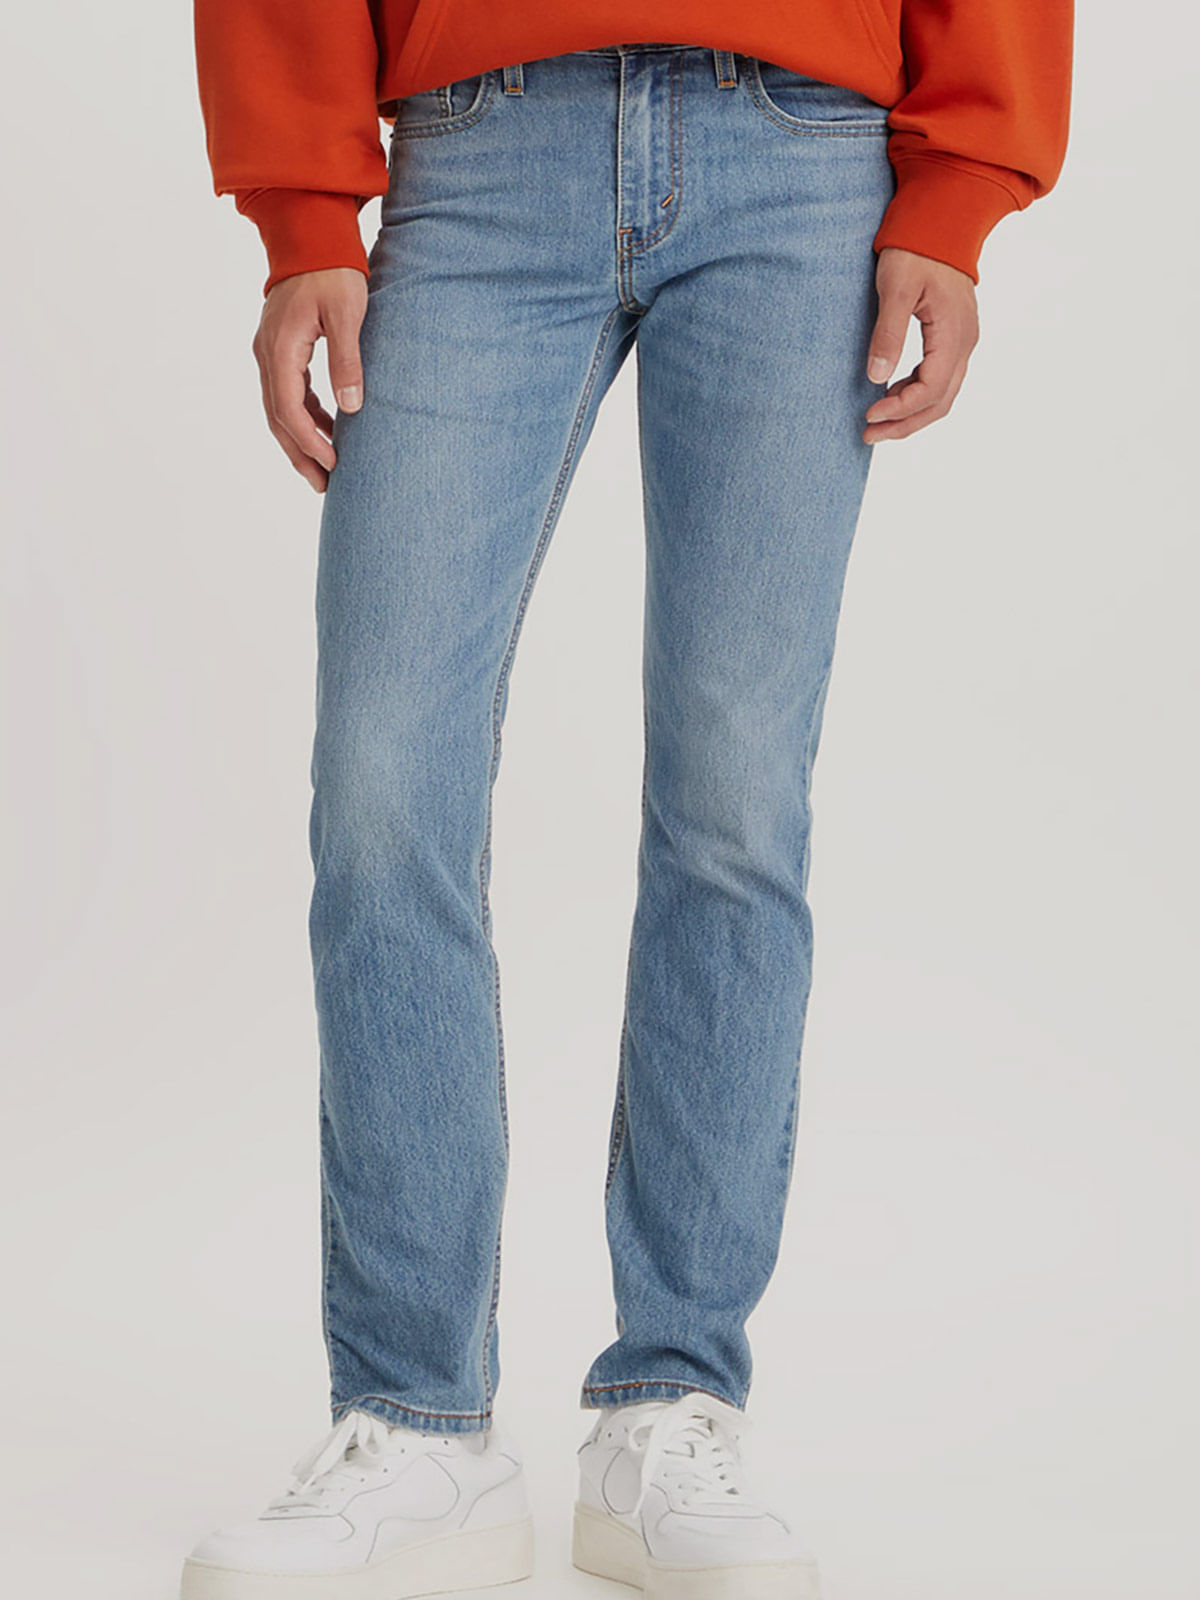 Jeans y Pantalones Levis 502 para Hombre, Levi's® Panamá - Tienda Oficial  de Levi's Online en Panama